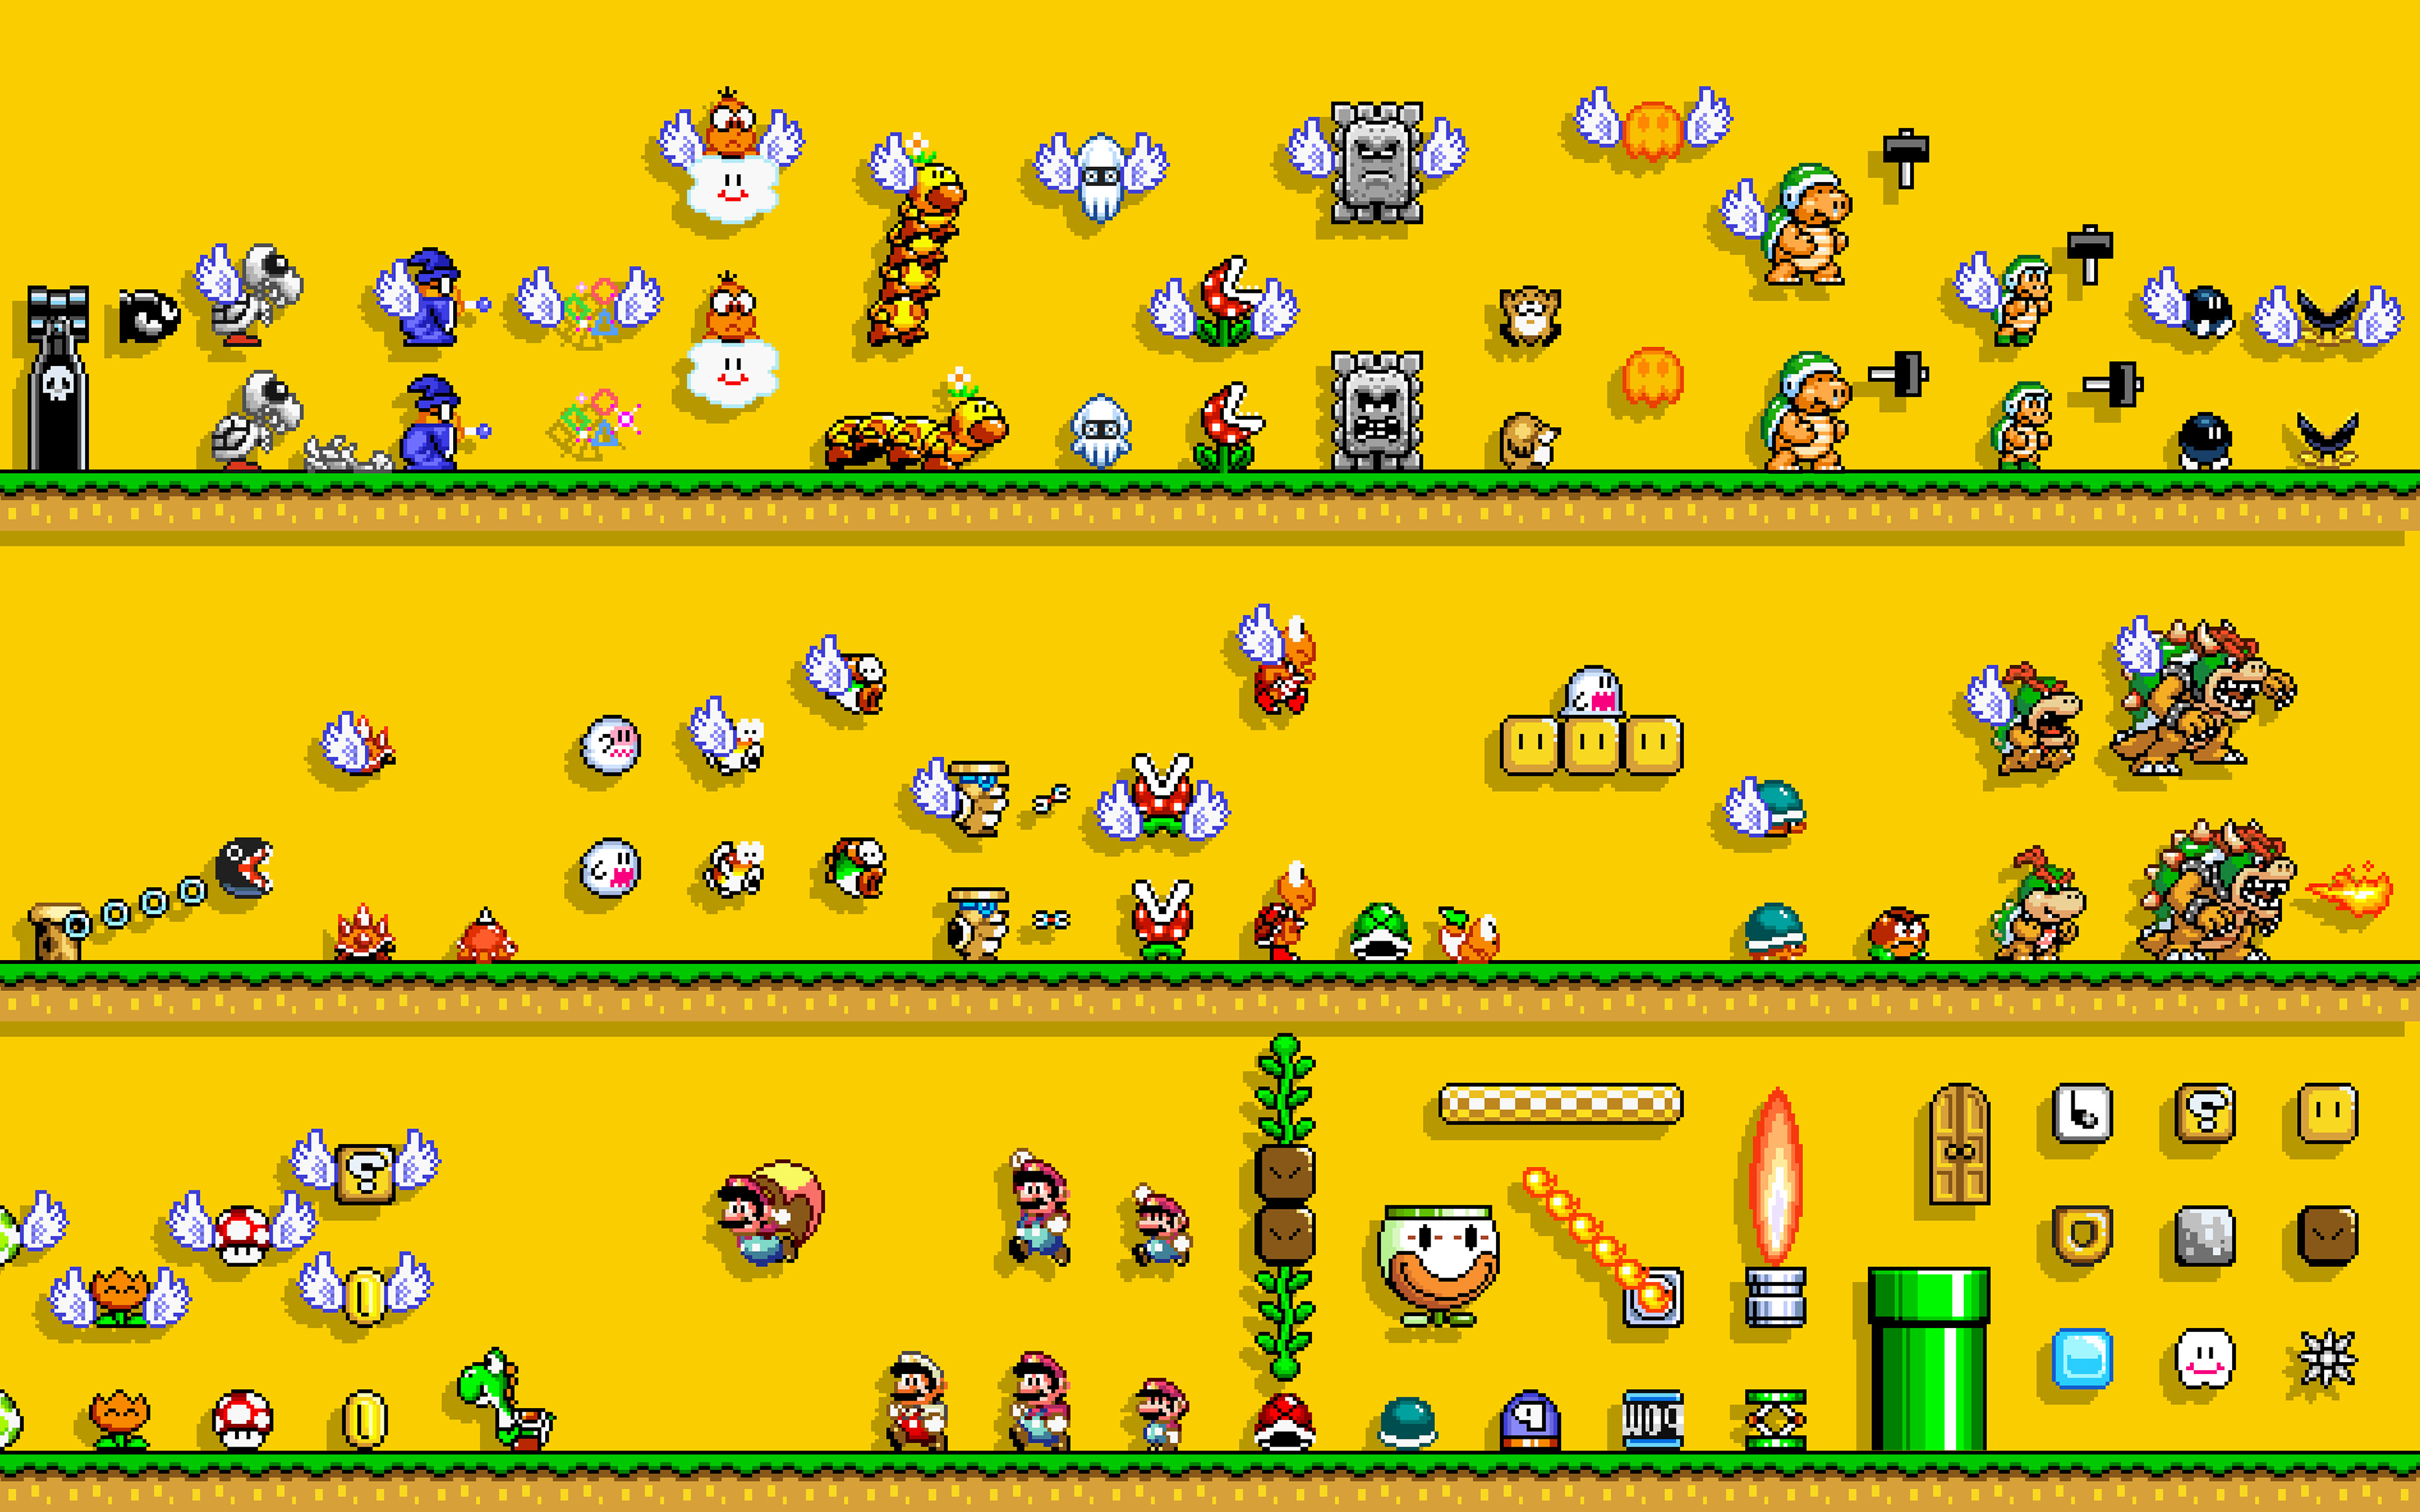 Mario Bros., Video Games, 8 bit, Simple Background, Retro Games, Nintendo Entertainment System, Super Mario Bros. Wallpaper